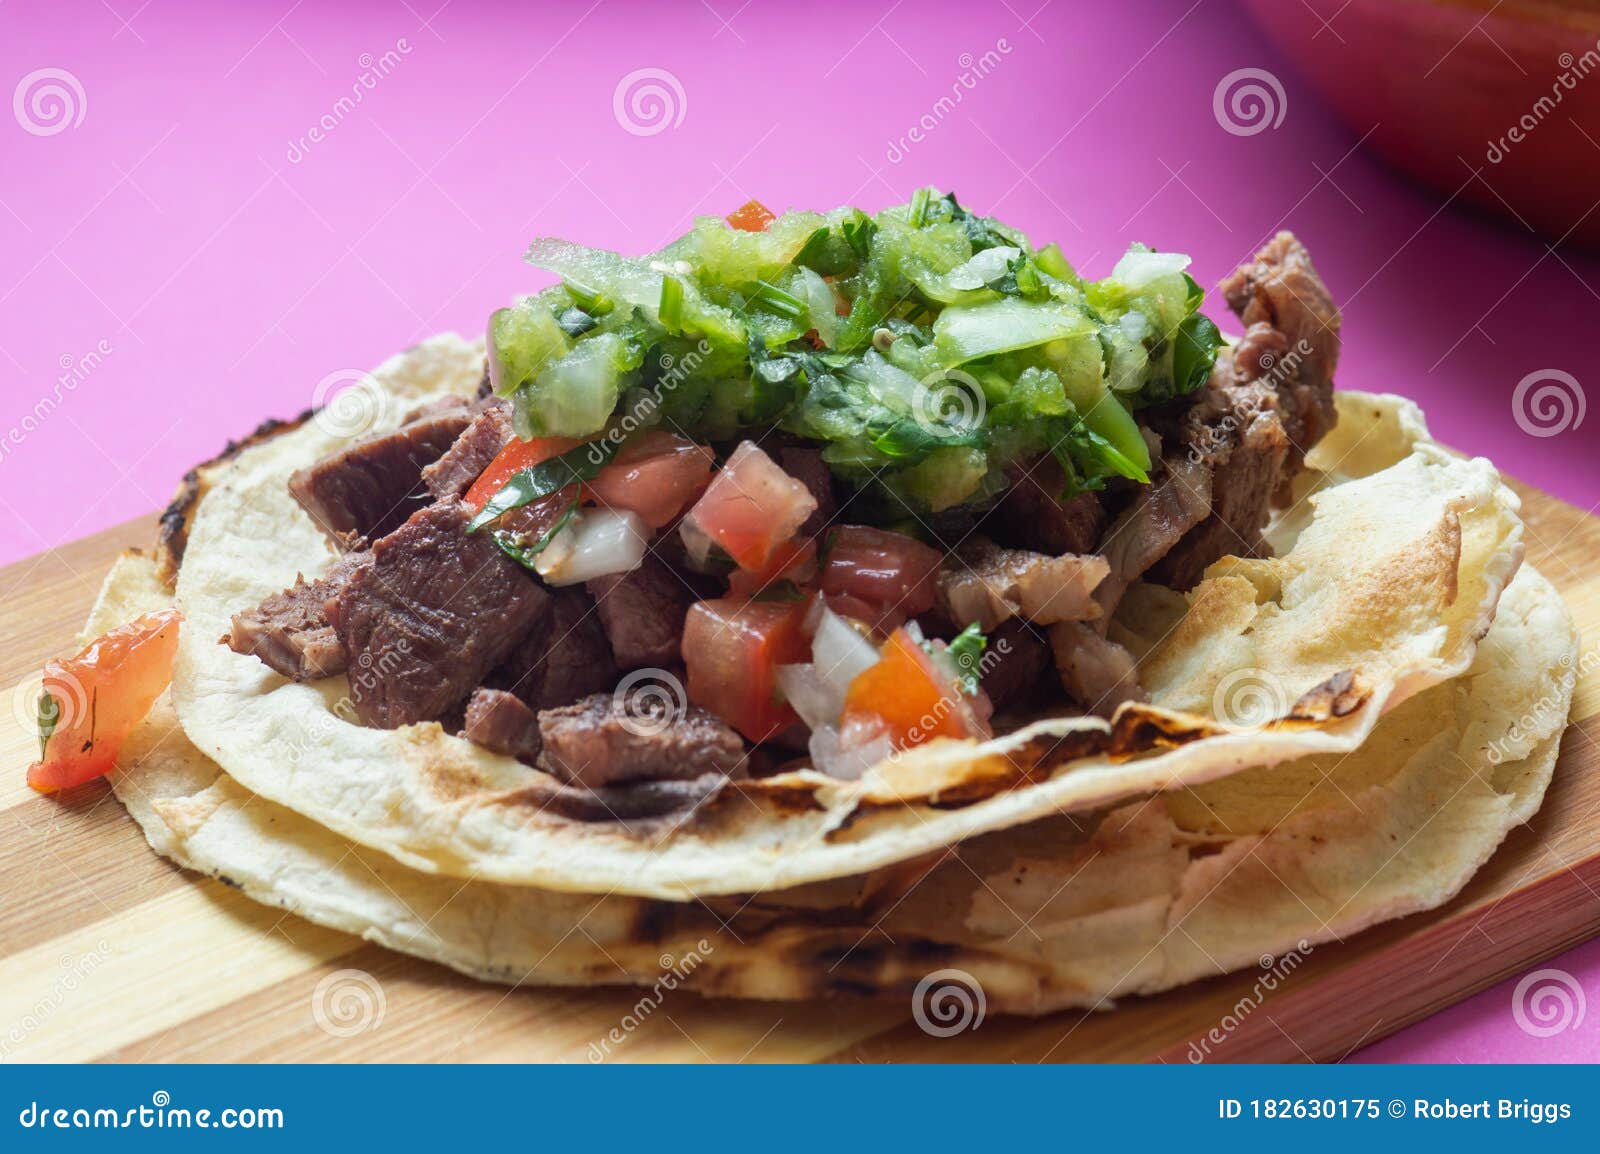 tijuana grilled beef tacos, mexican carne asada tacos